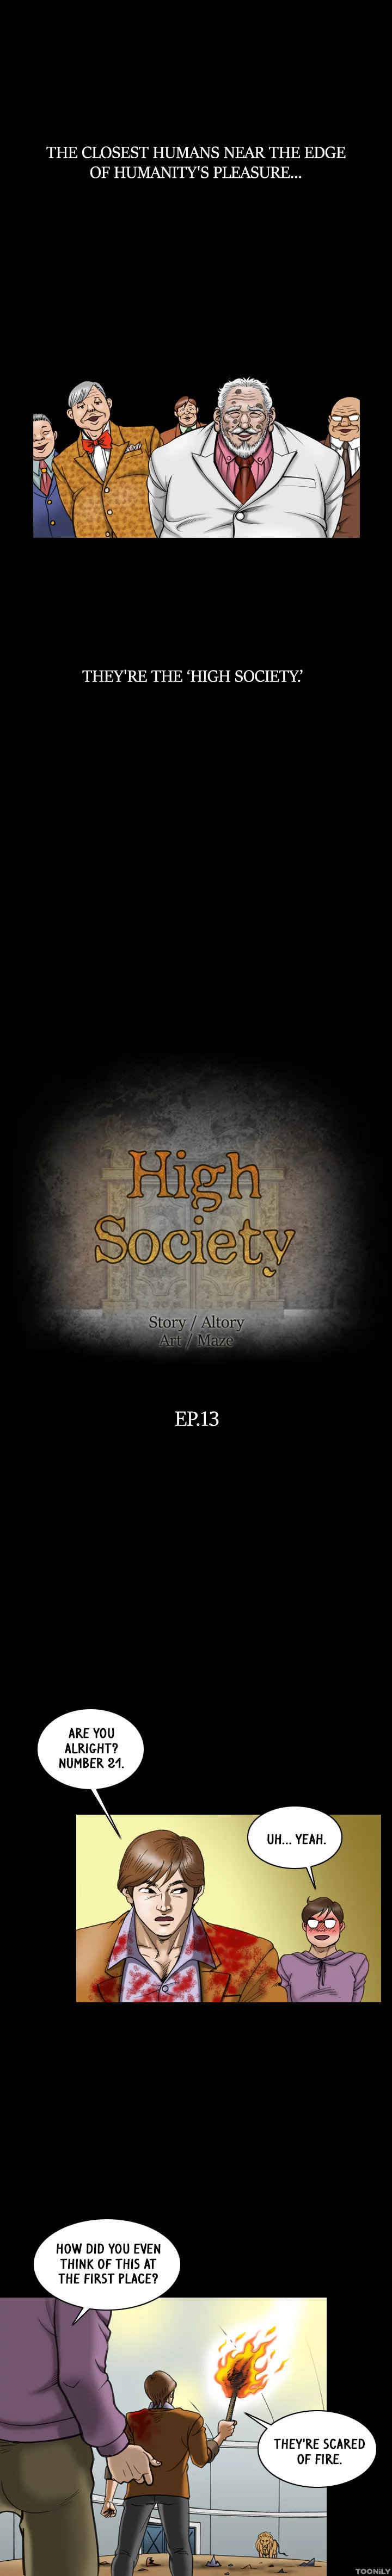 High Society NEW image